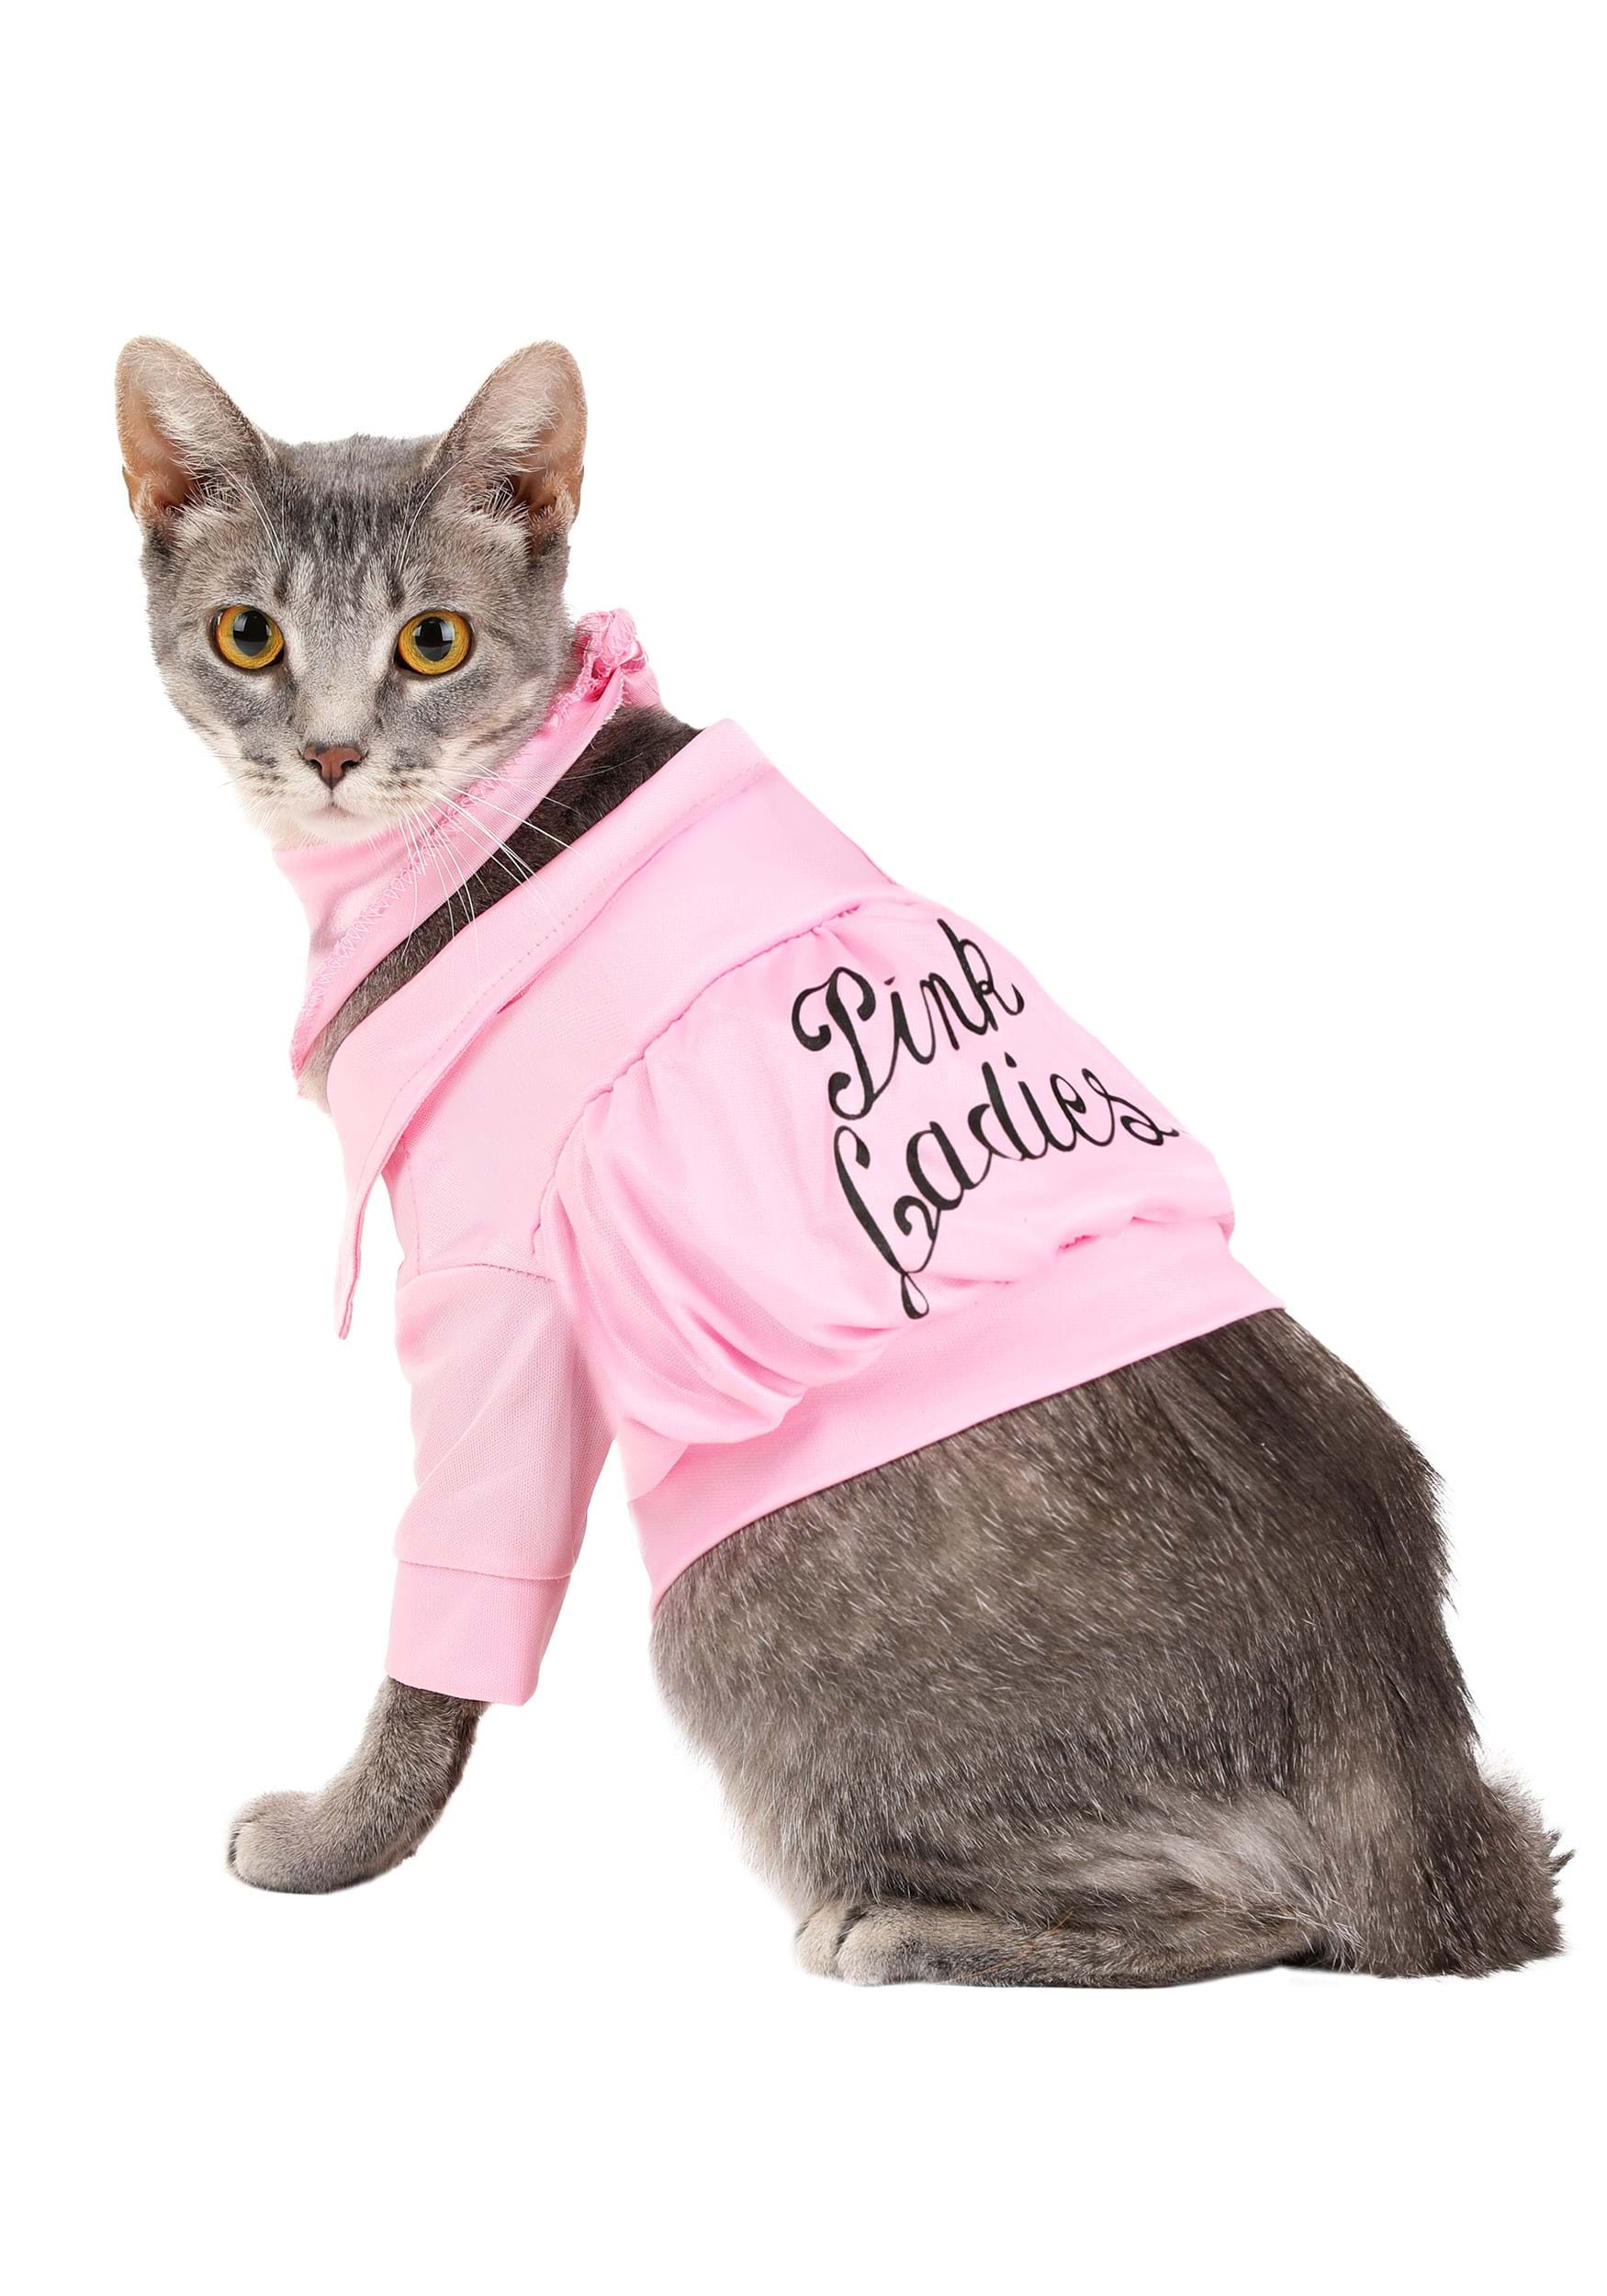 Grease Pink Ladies Jacket Dog Costume